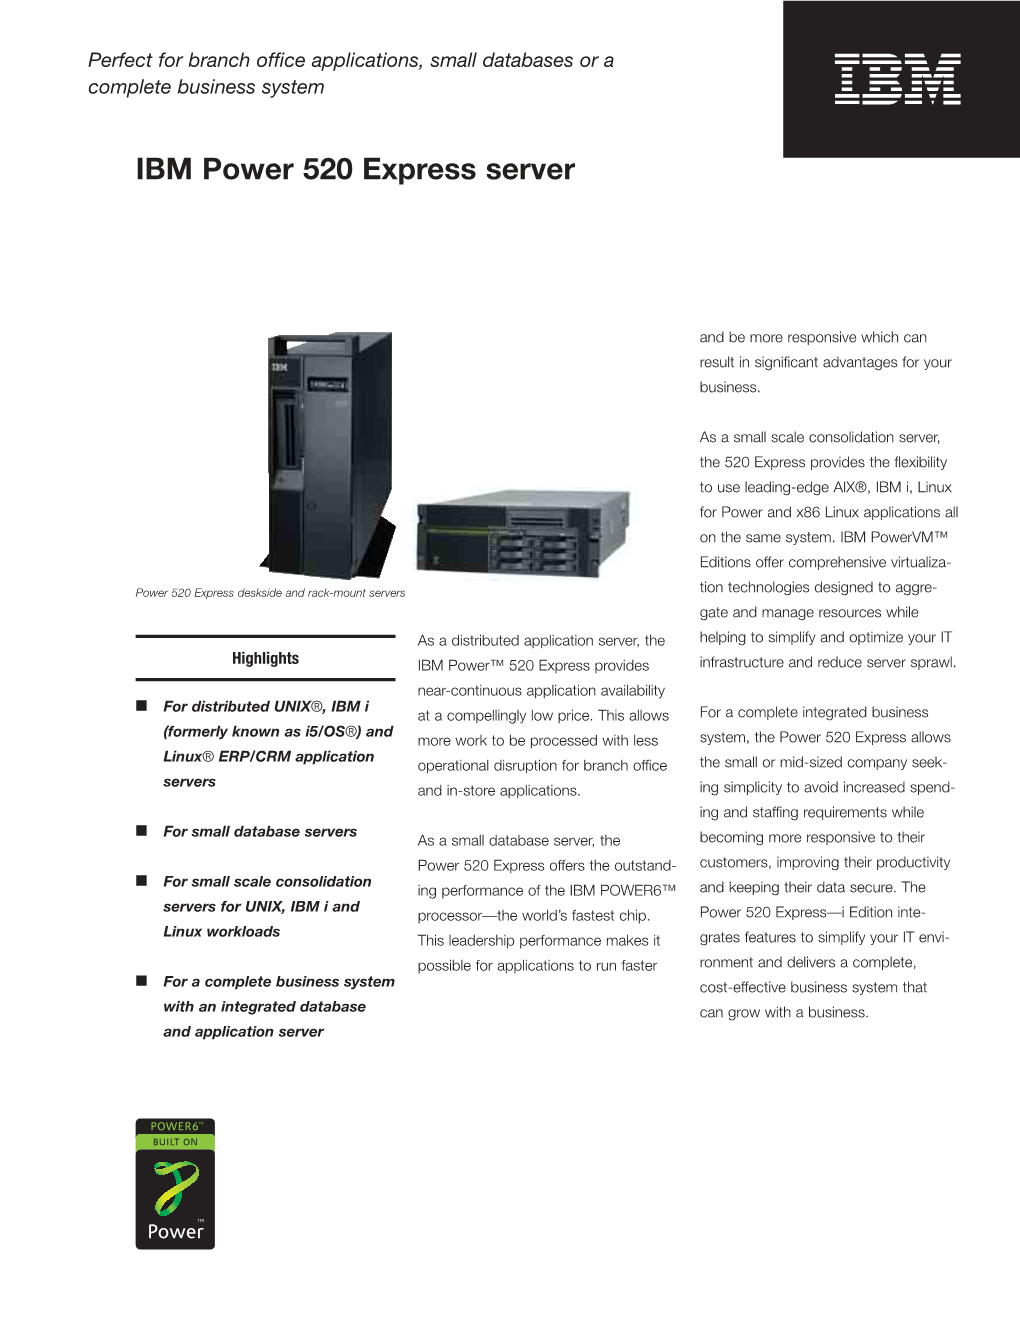 IBM Power 520 Express Server